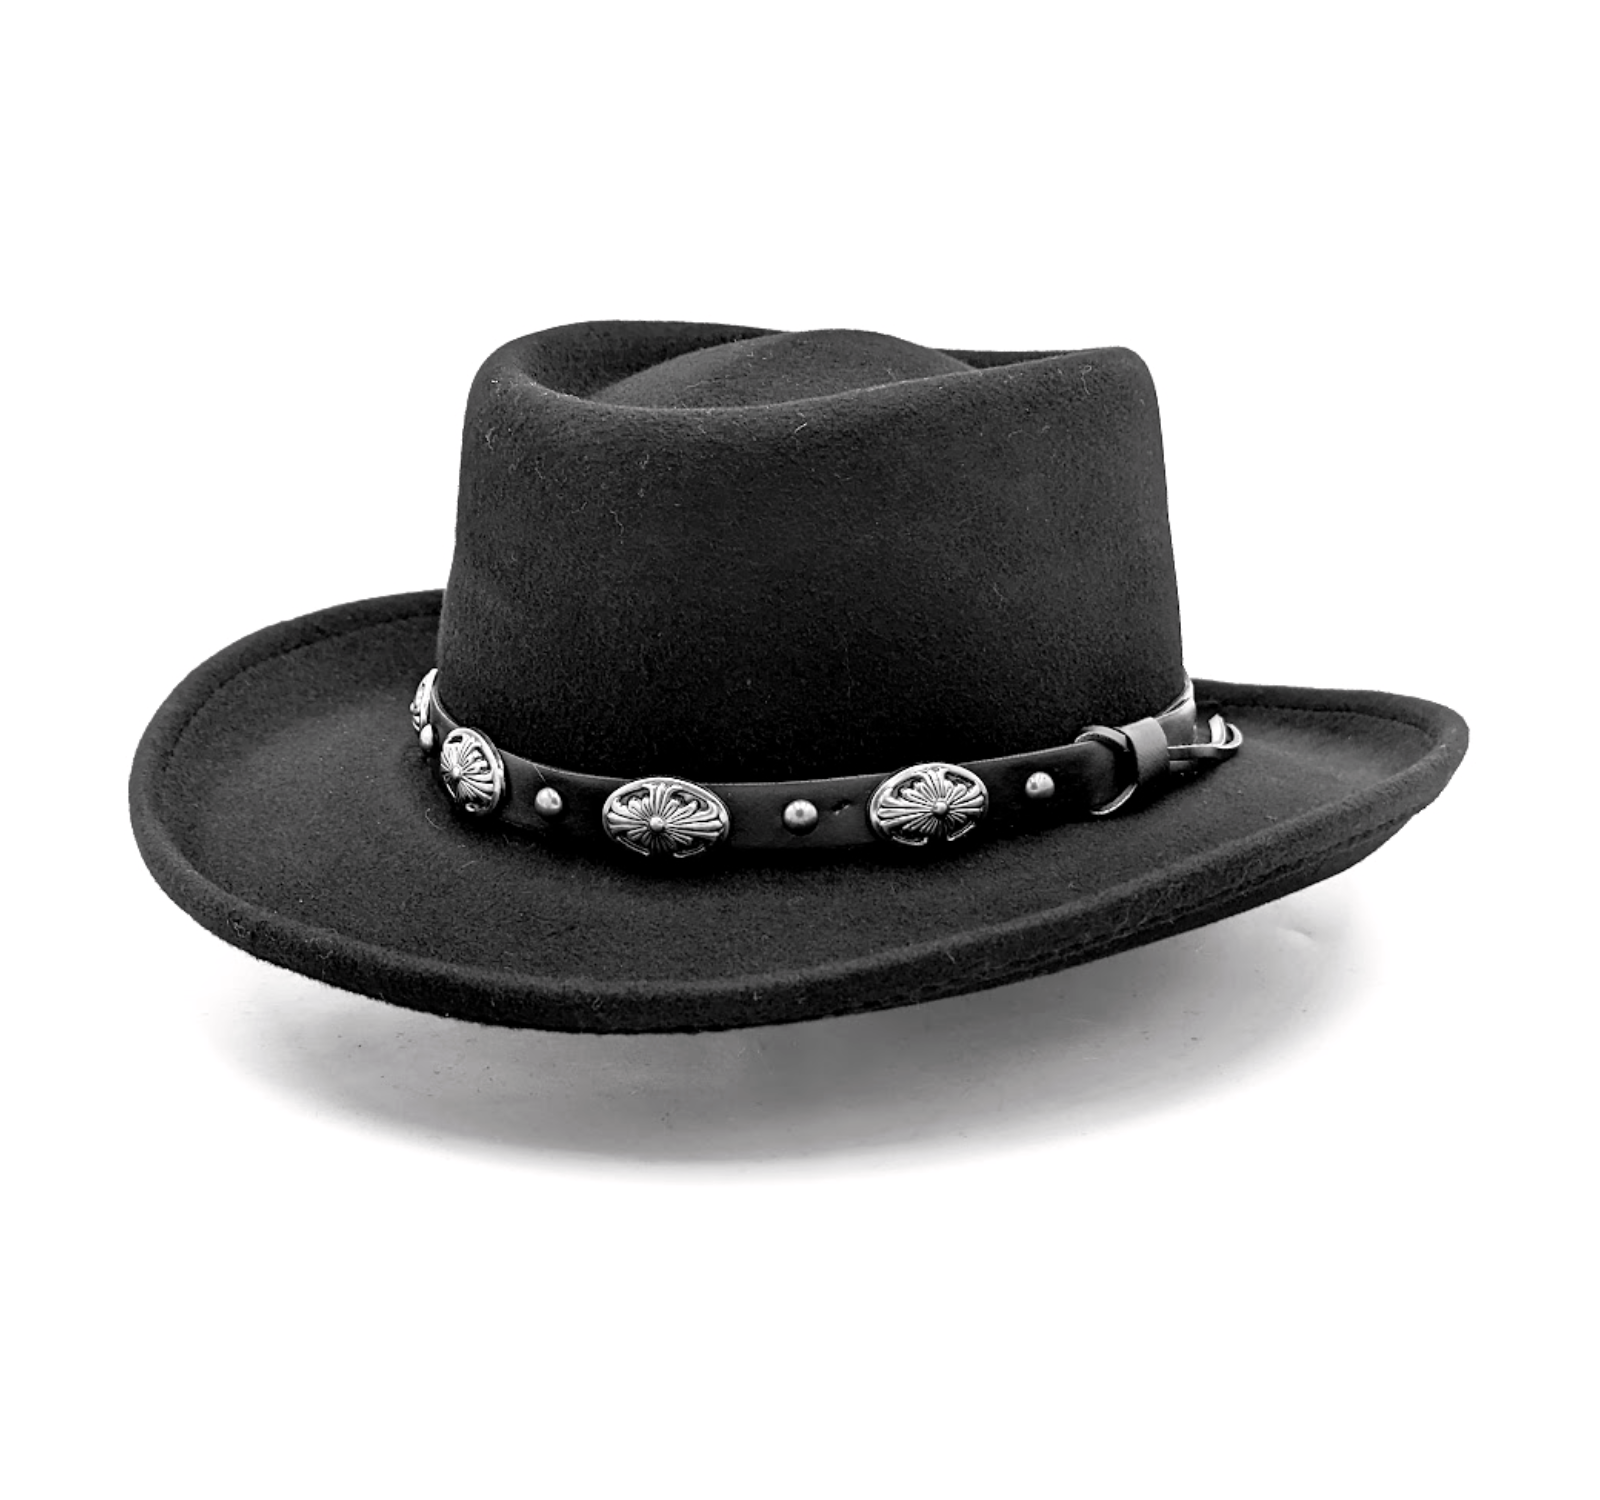 The Gambler Cowboy Hat